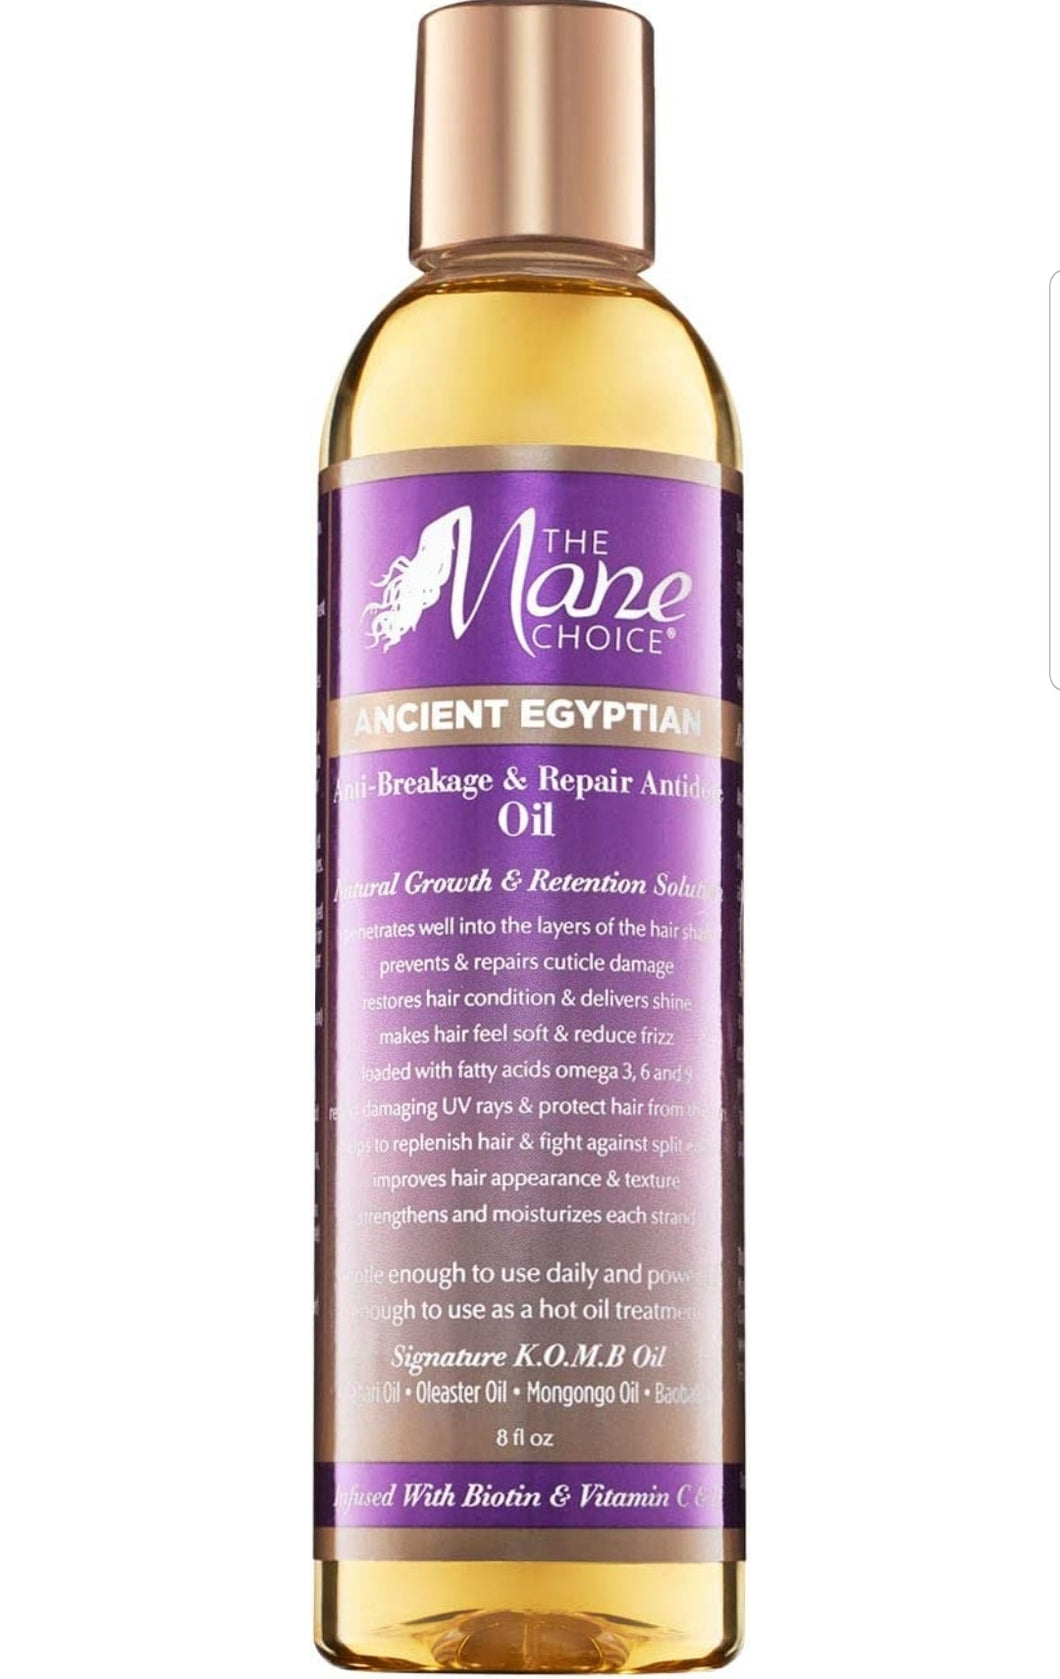 The Mane Choice Ancient Egyptian Anti-Breakage & Repair Daily Treatment Oil